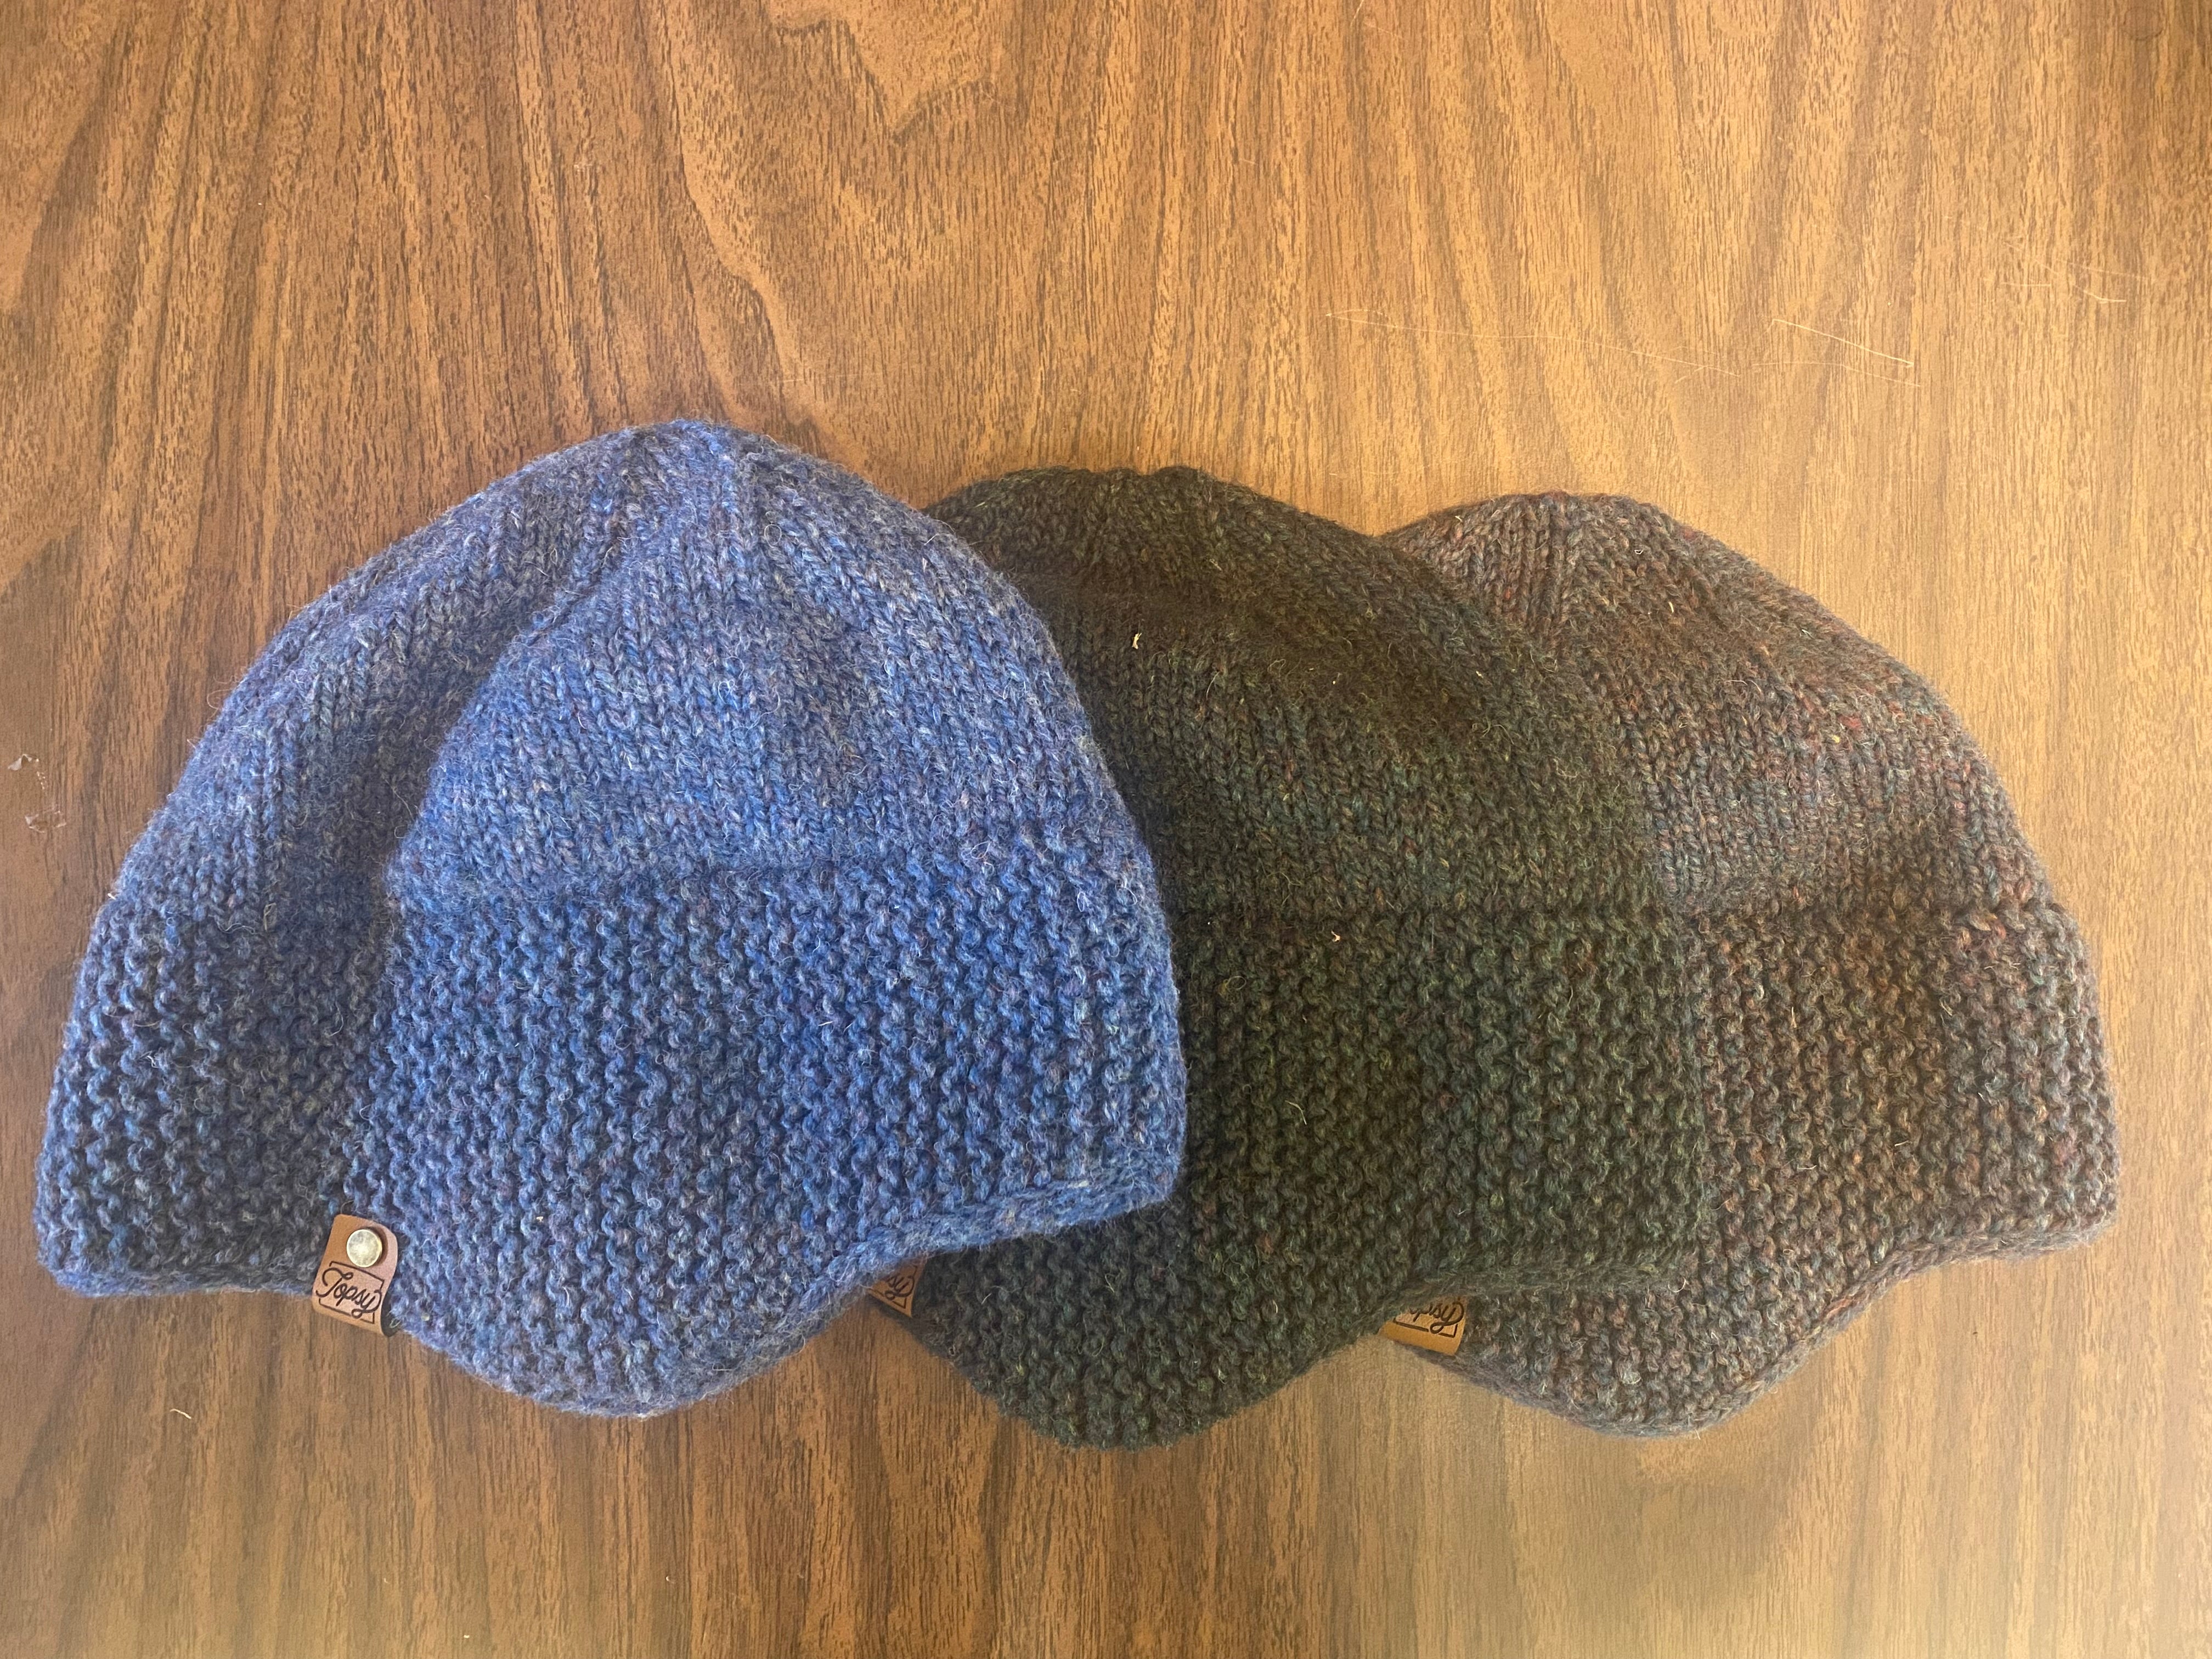 Mariner's wool hat